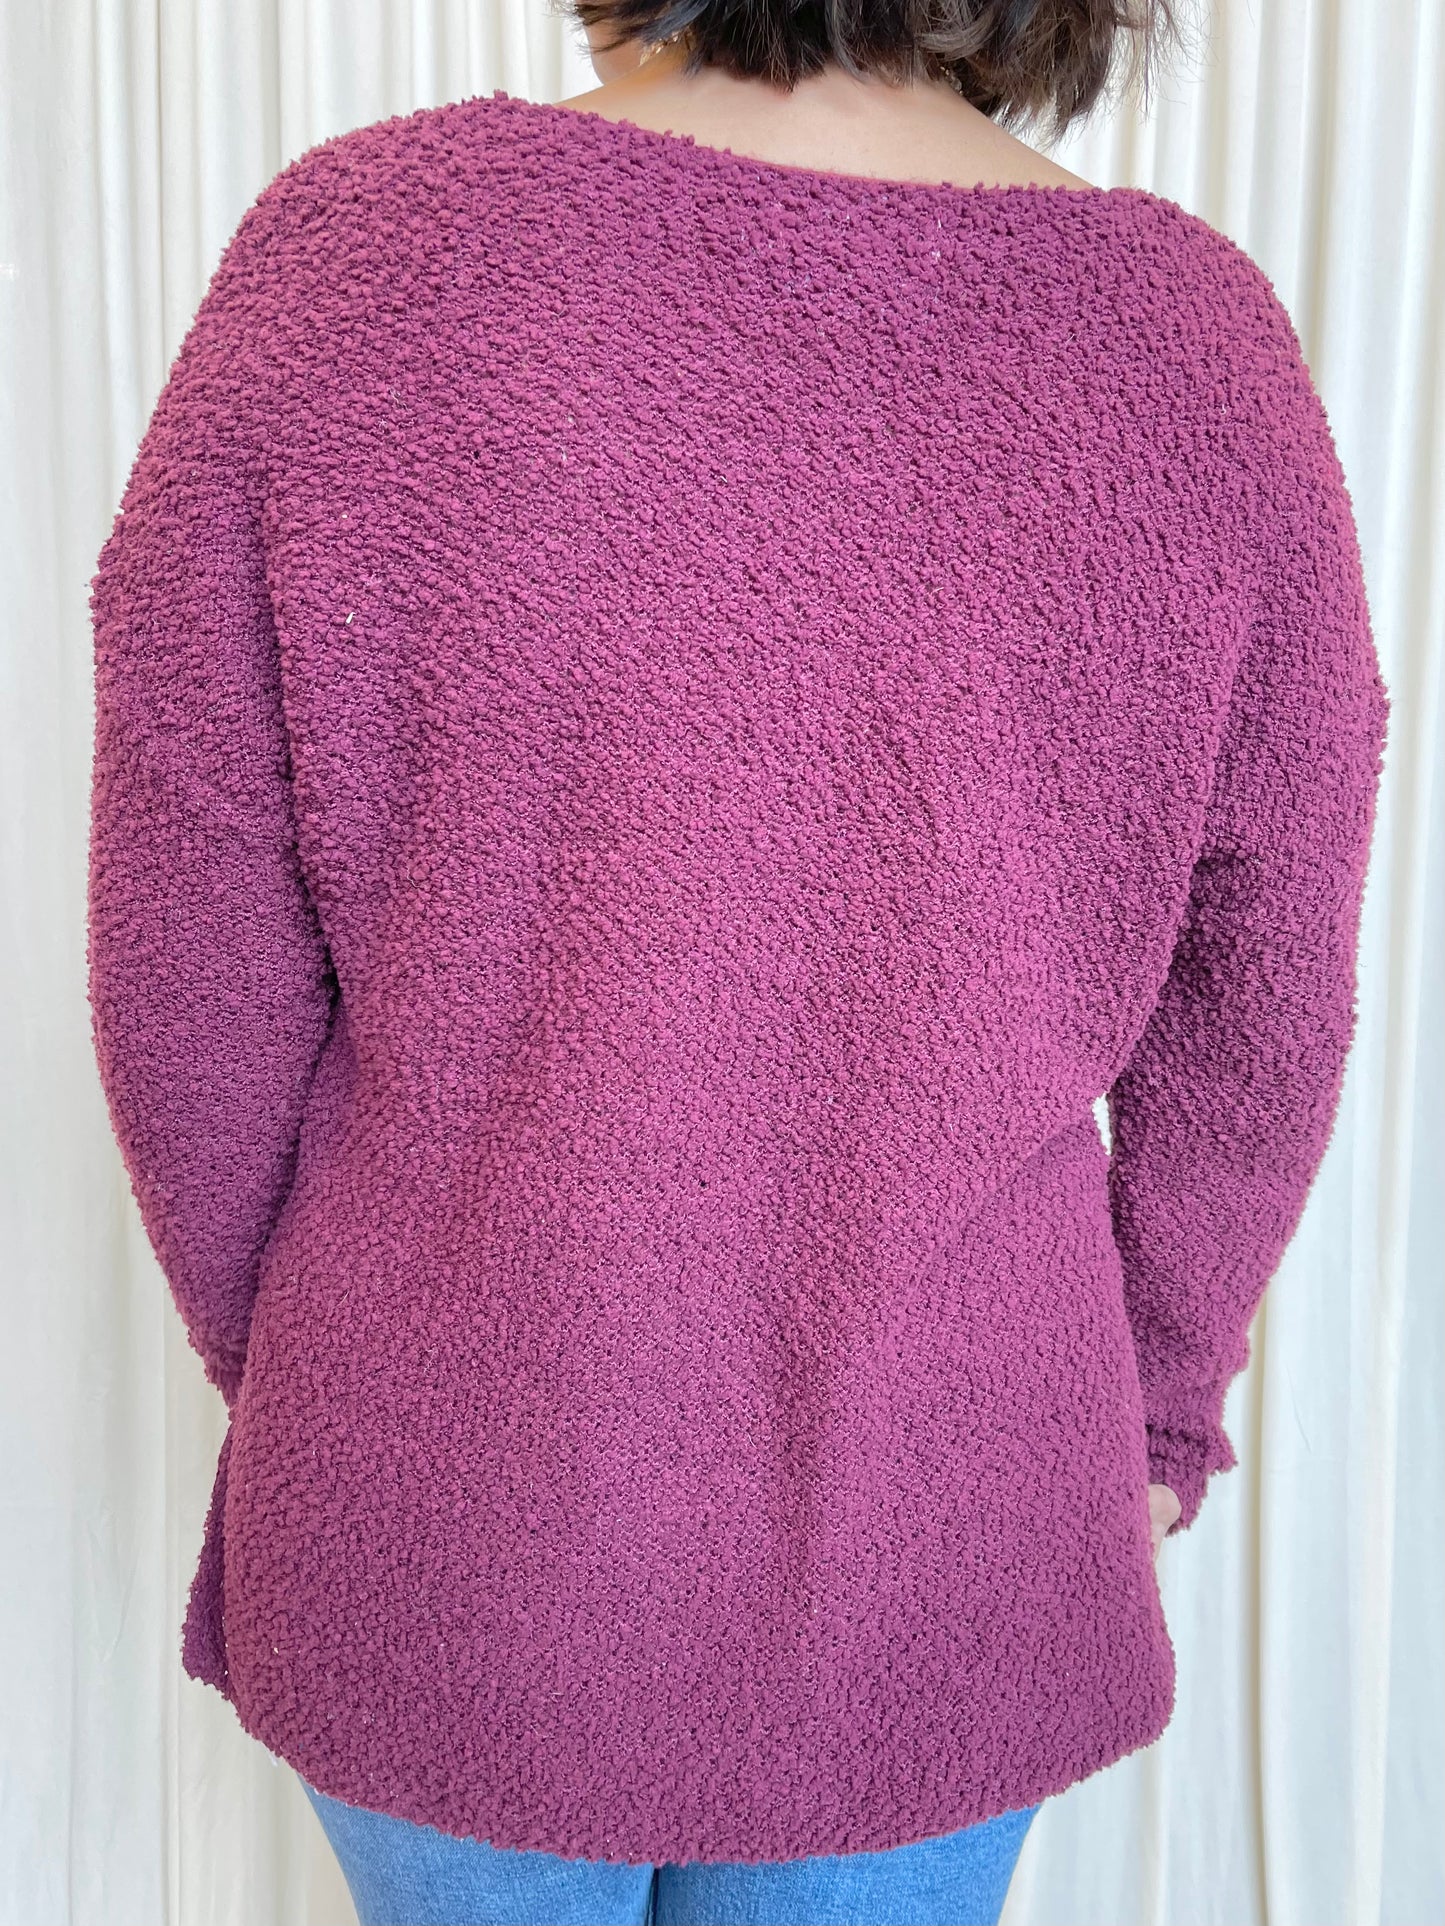 Maroon Textured Sweater - Large